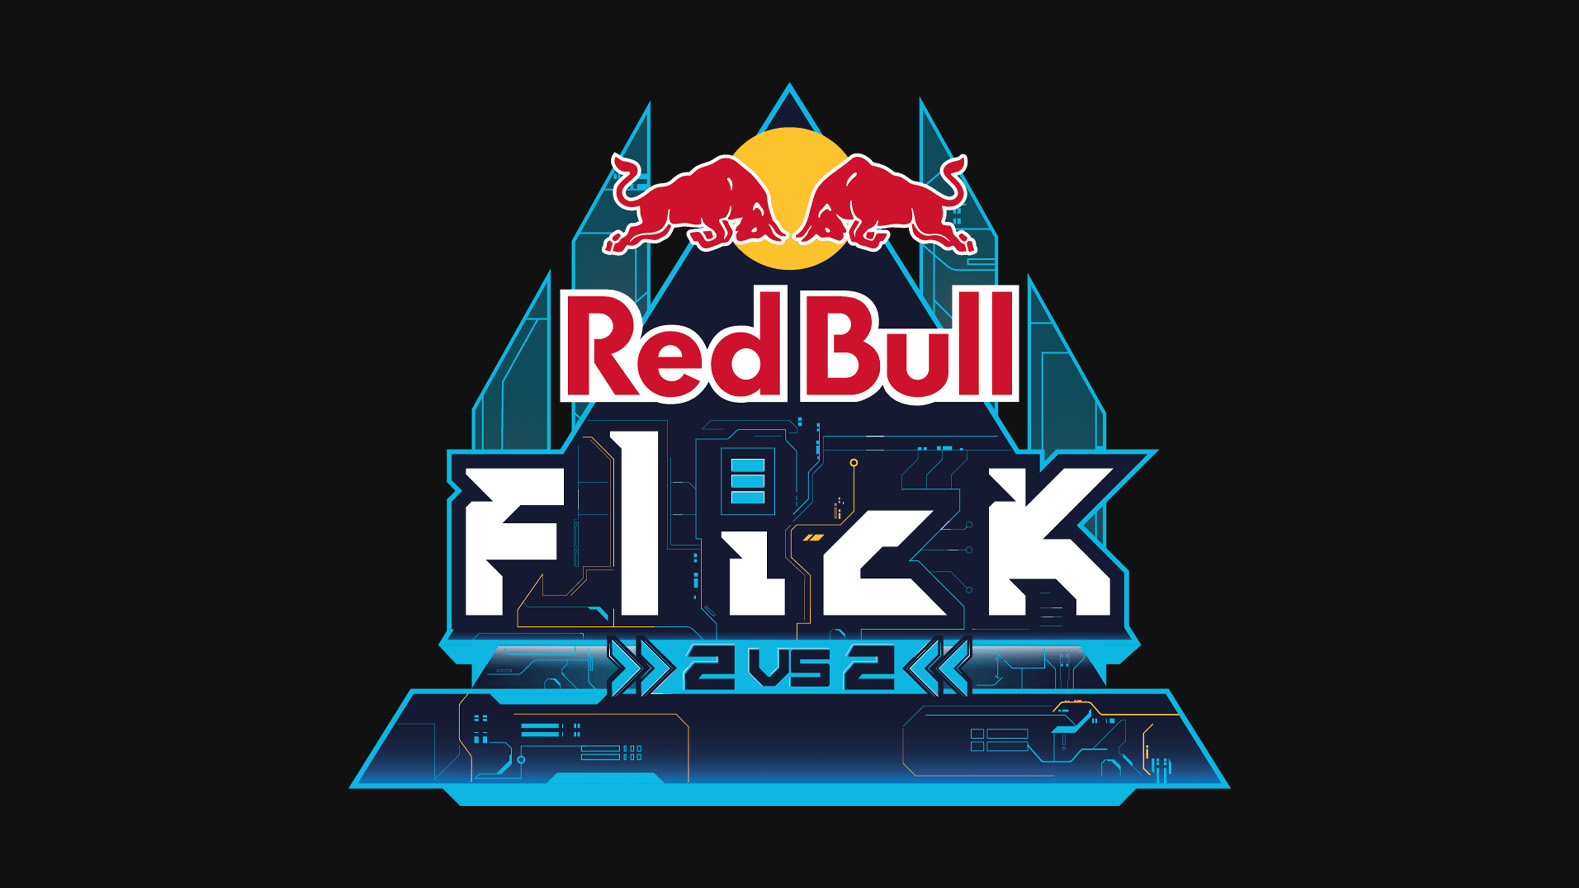 Das große GoBIG League Red Bull Flick Event 2021